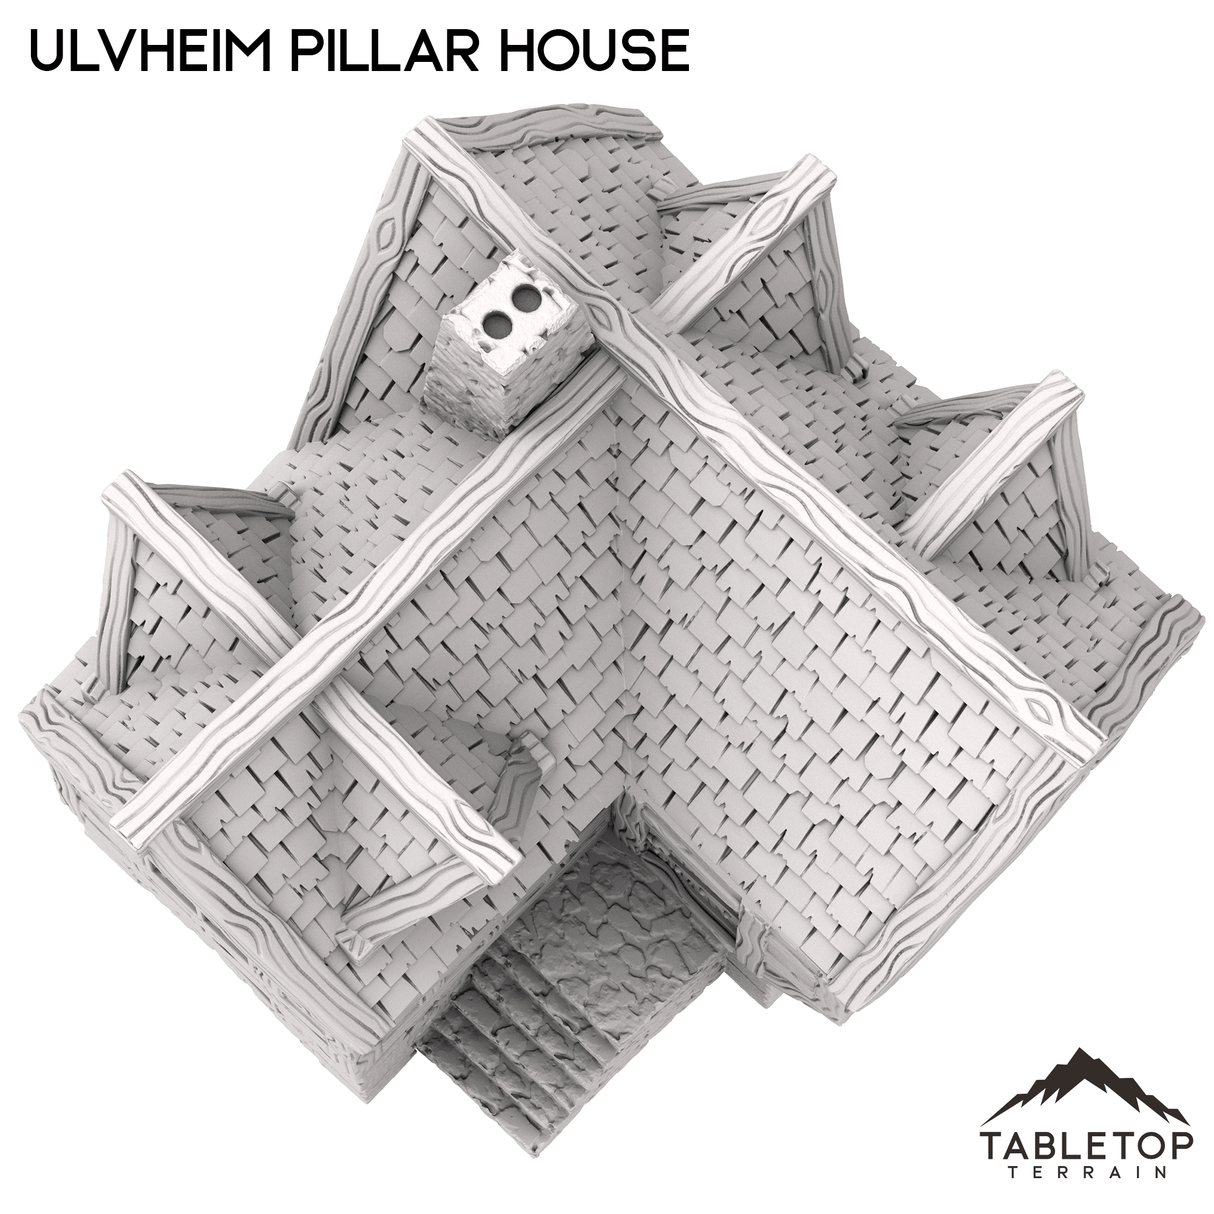 Tabletop Terrain Building Ulvheim Pillar House - Fantasy Building